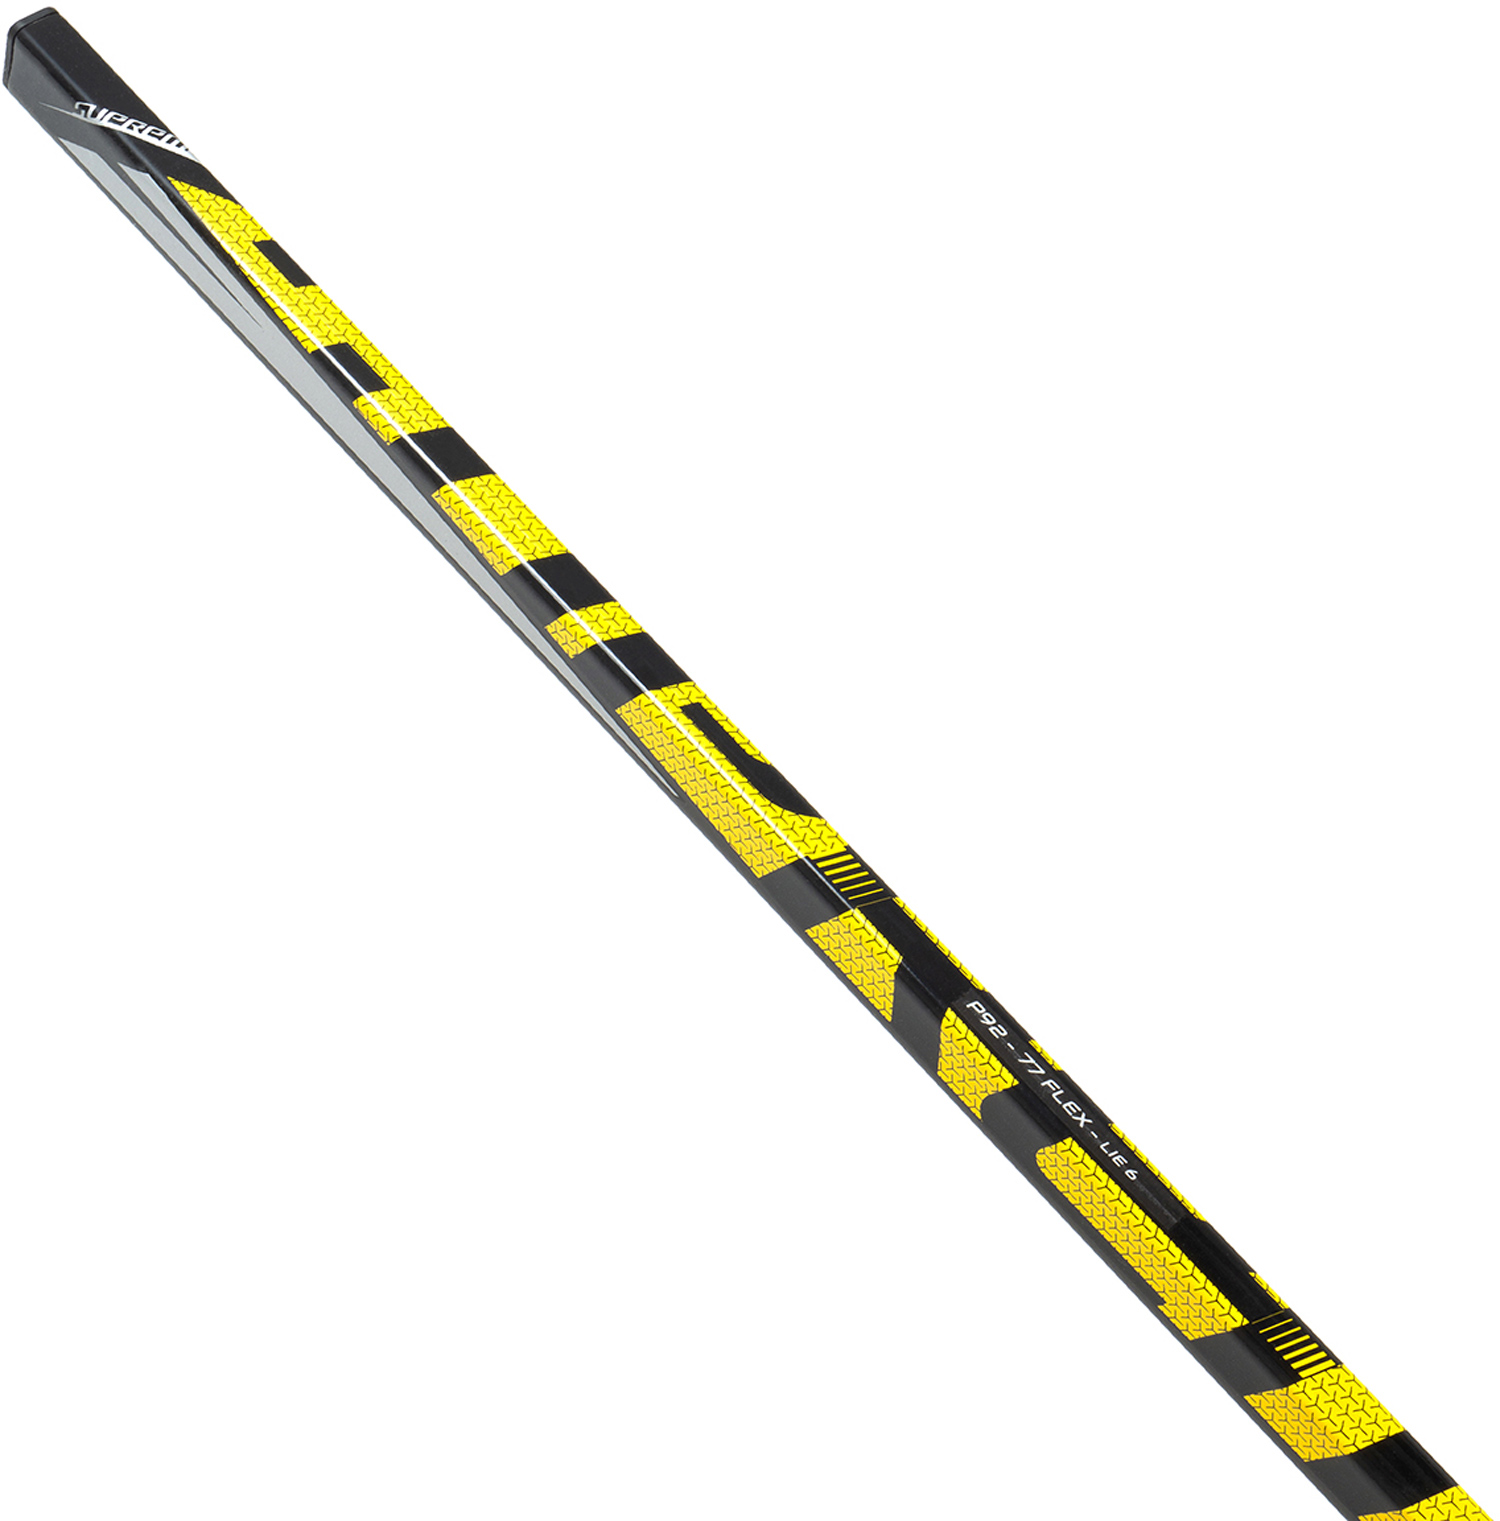 Juniors’ hockey stick